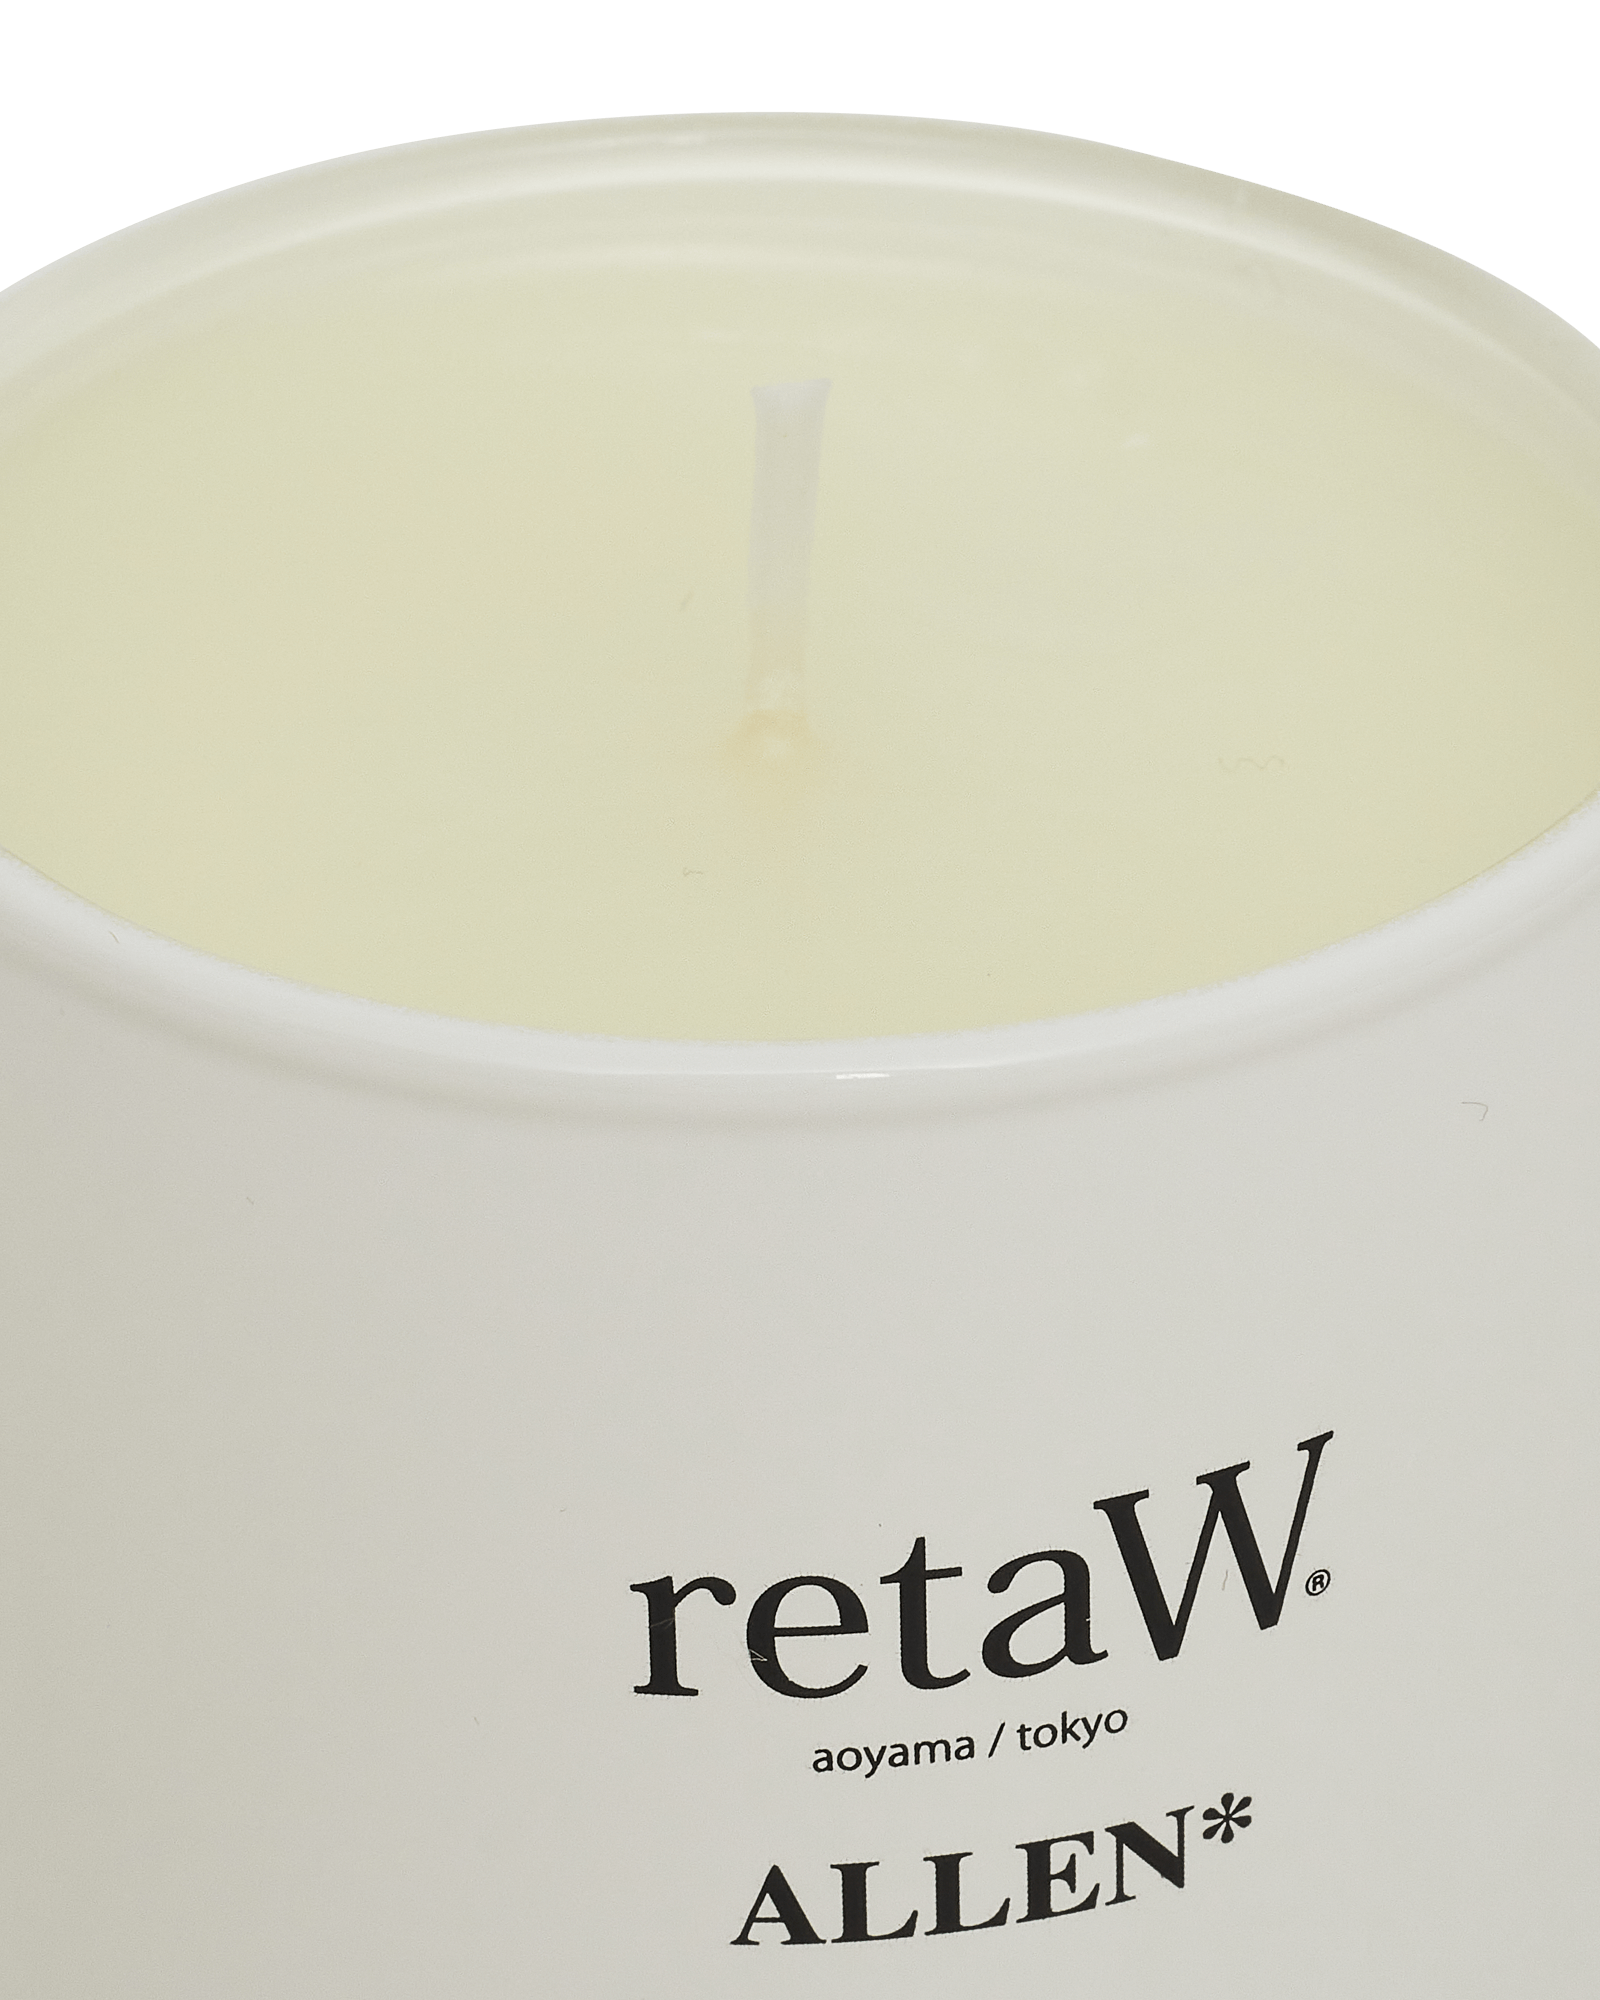 Reta-W Allen White Homeware Candles RTW-234 WHITE